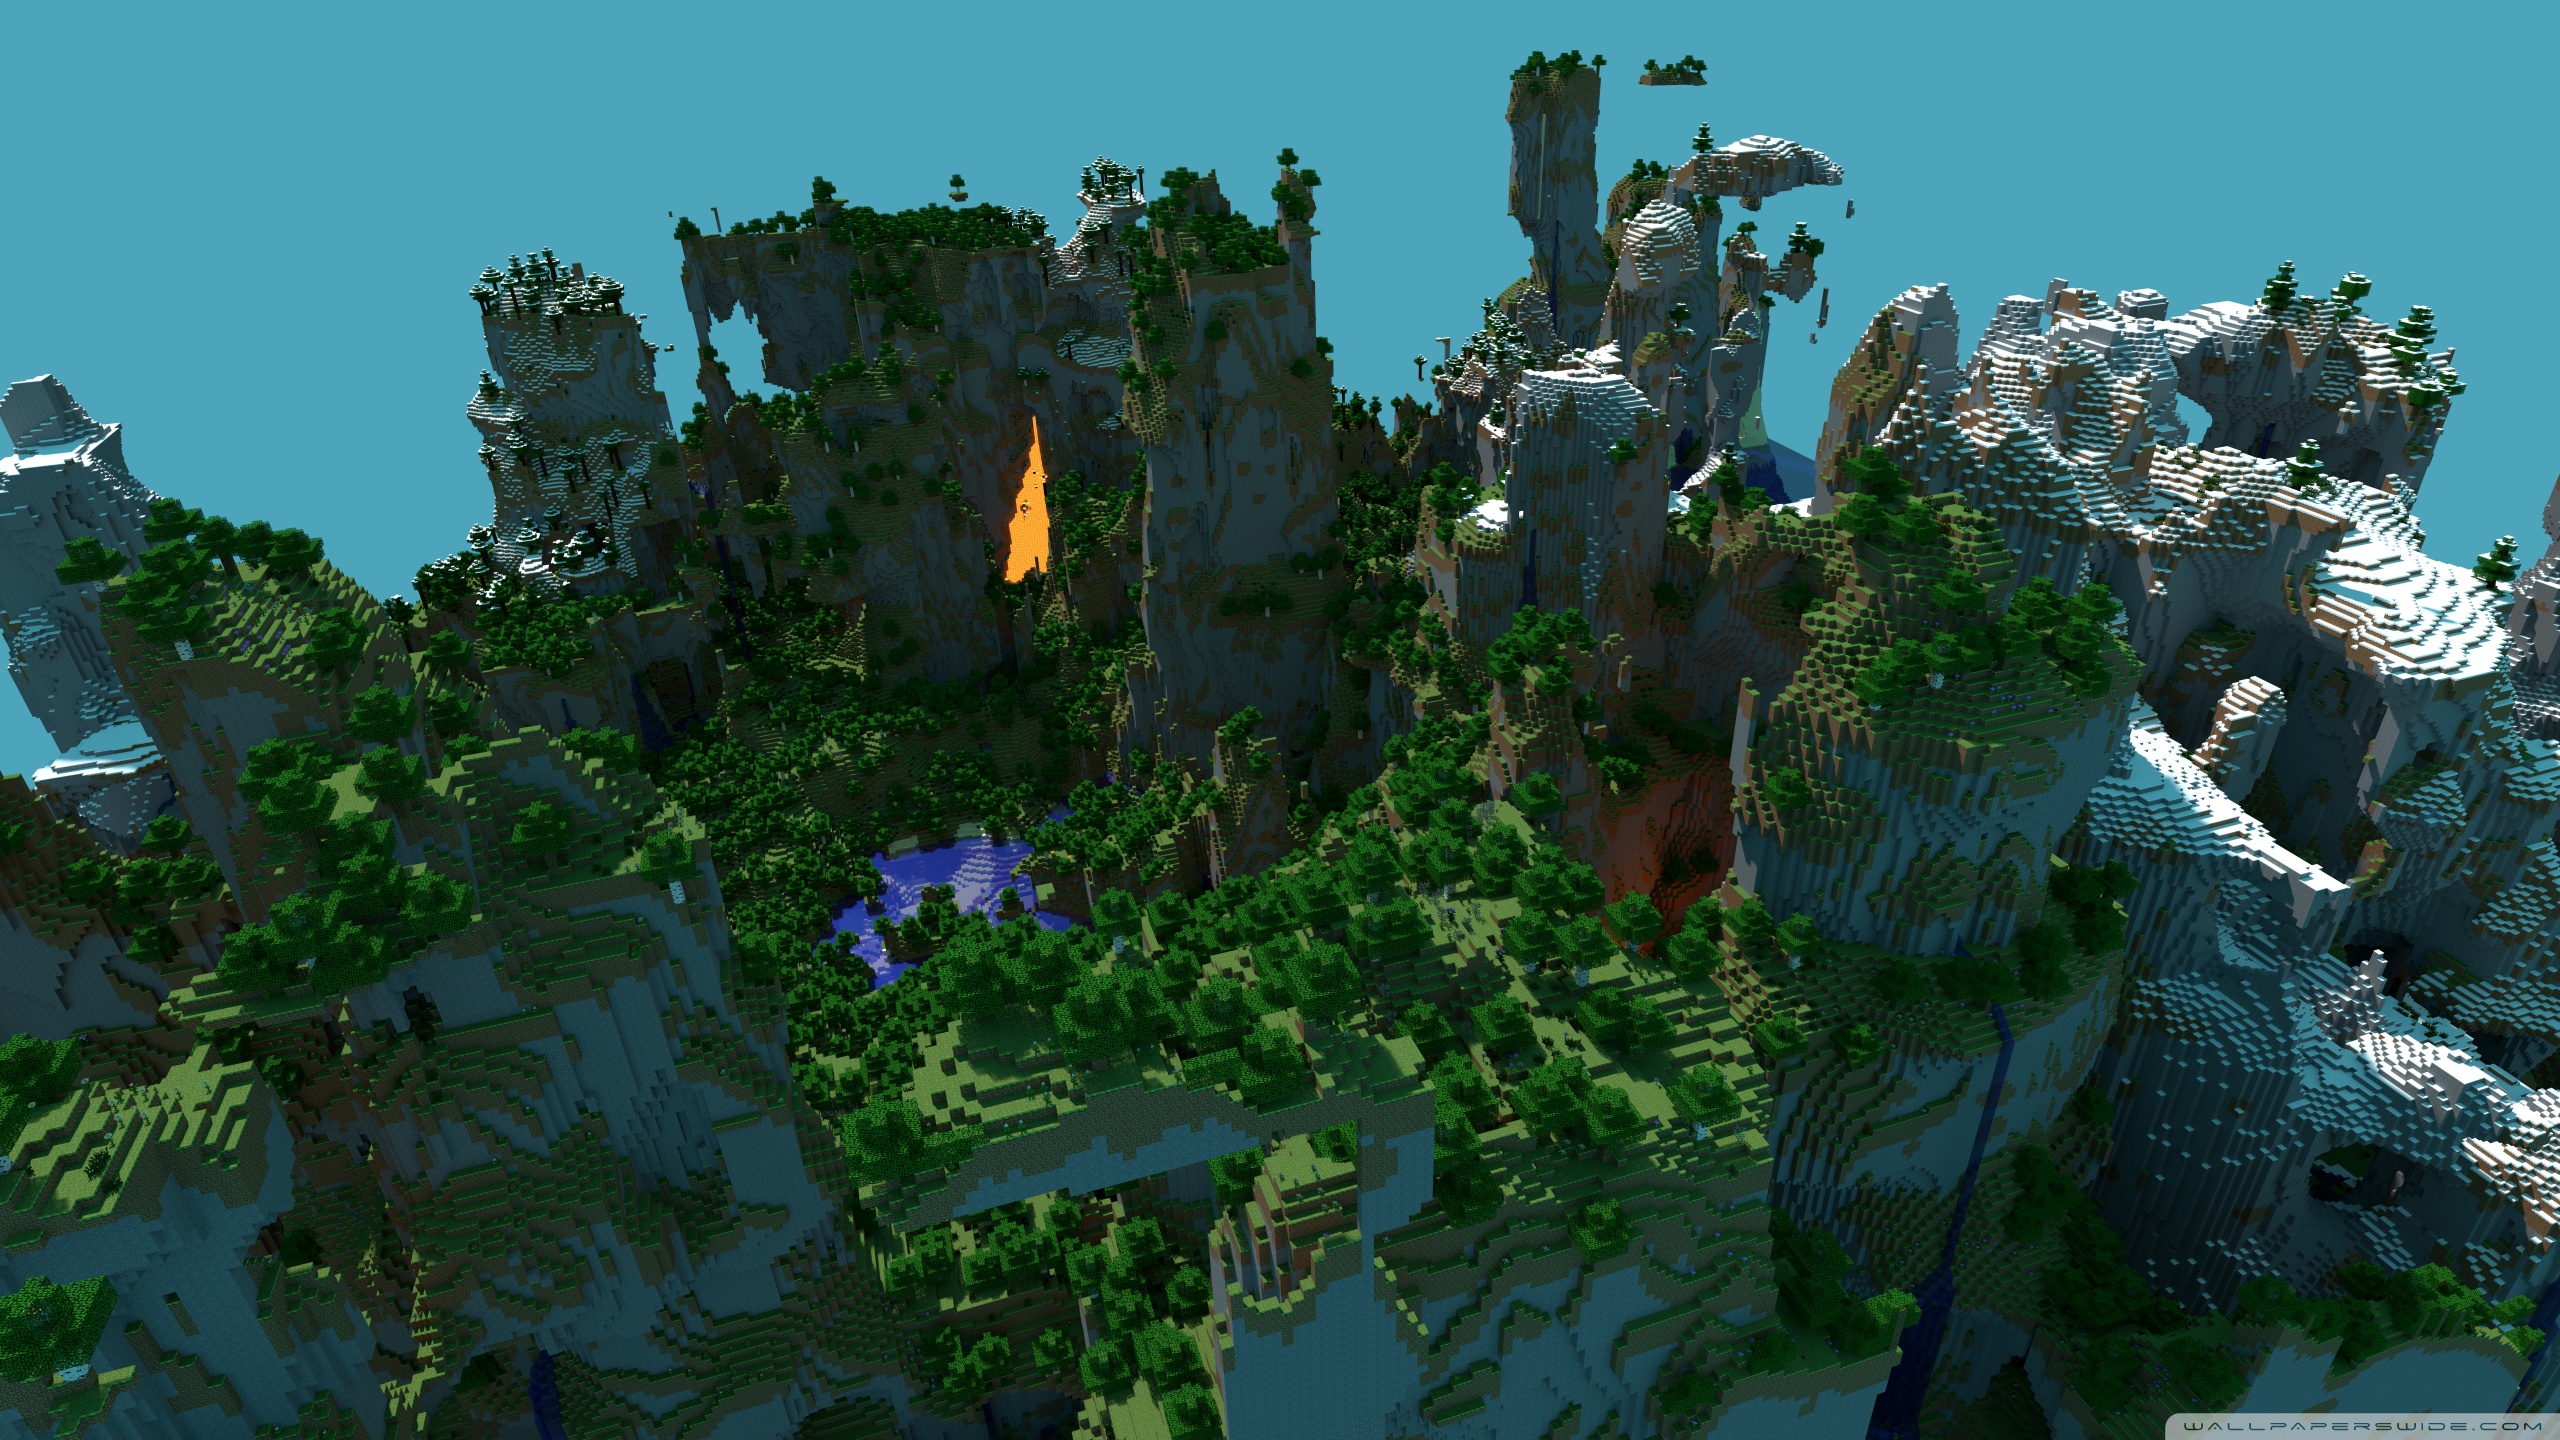 Minecraft Landscape Ultra HD Desktop Background Wallpaper For